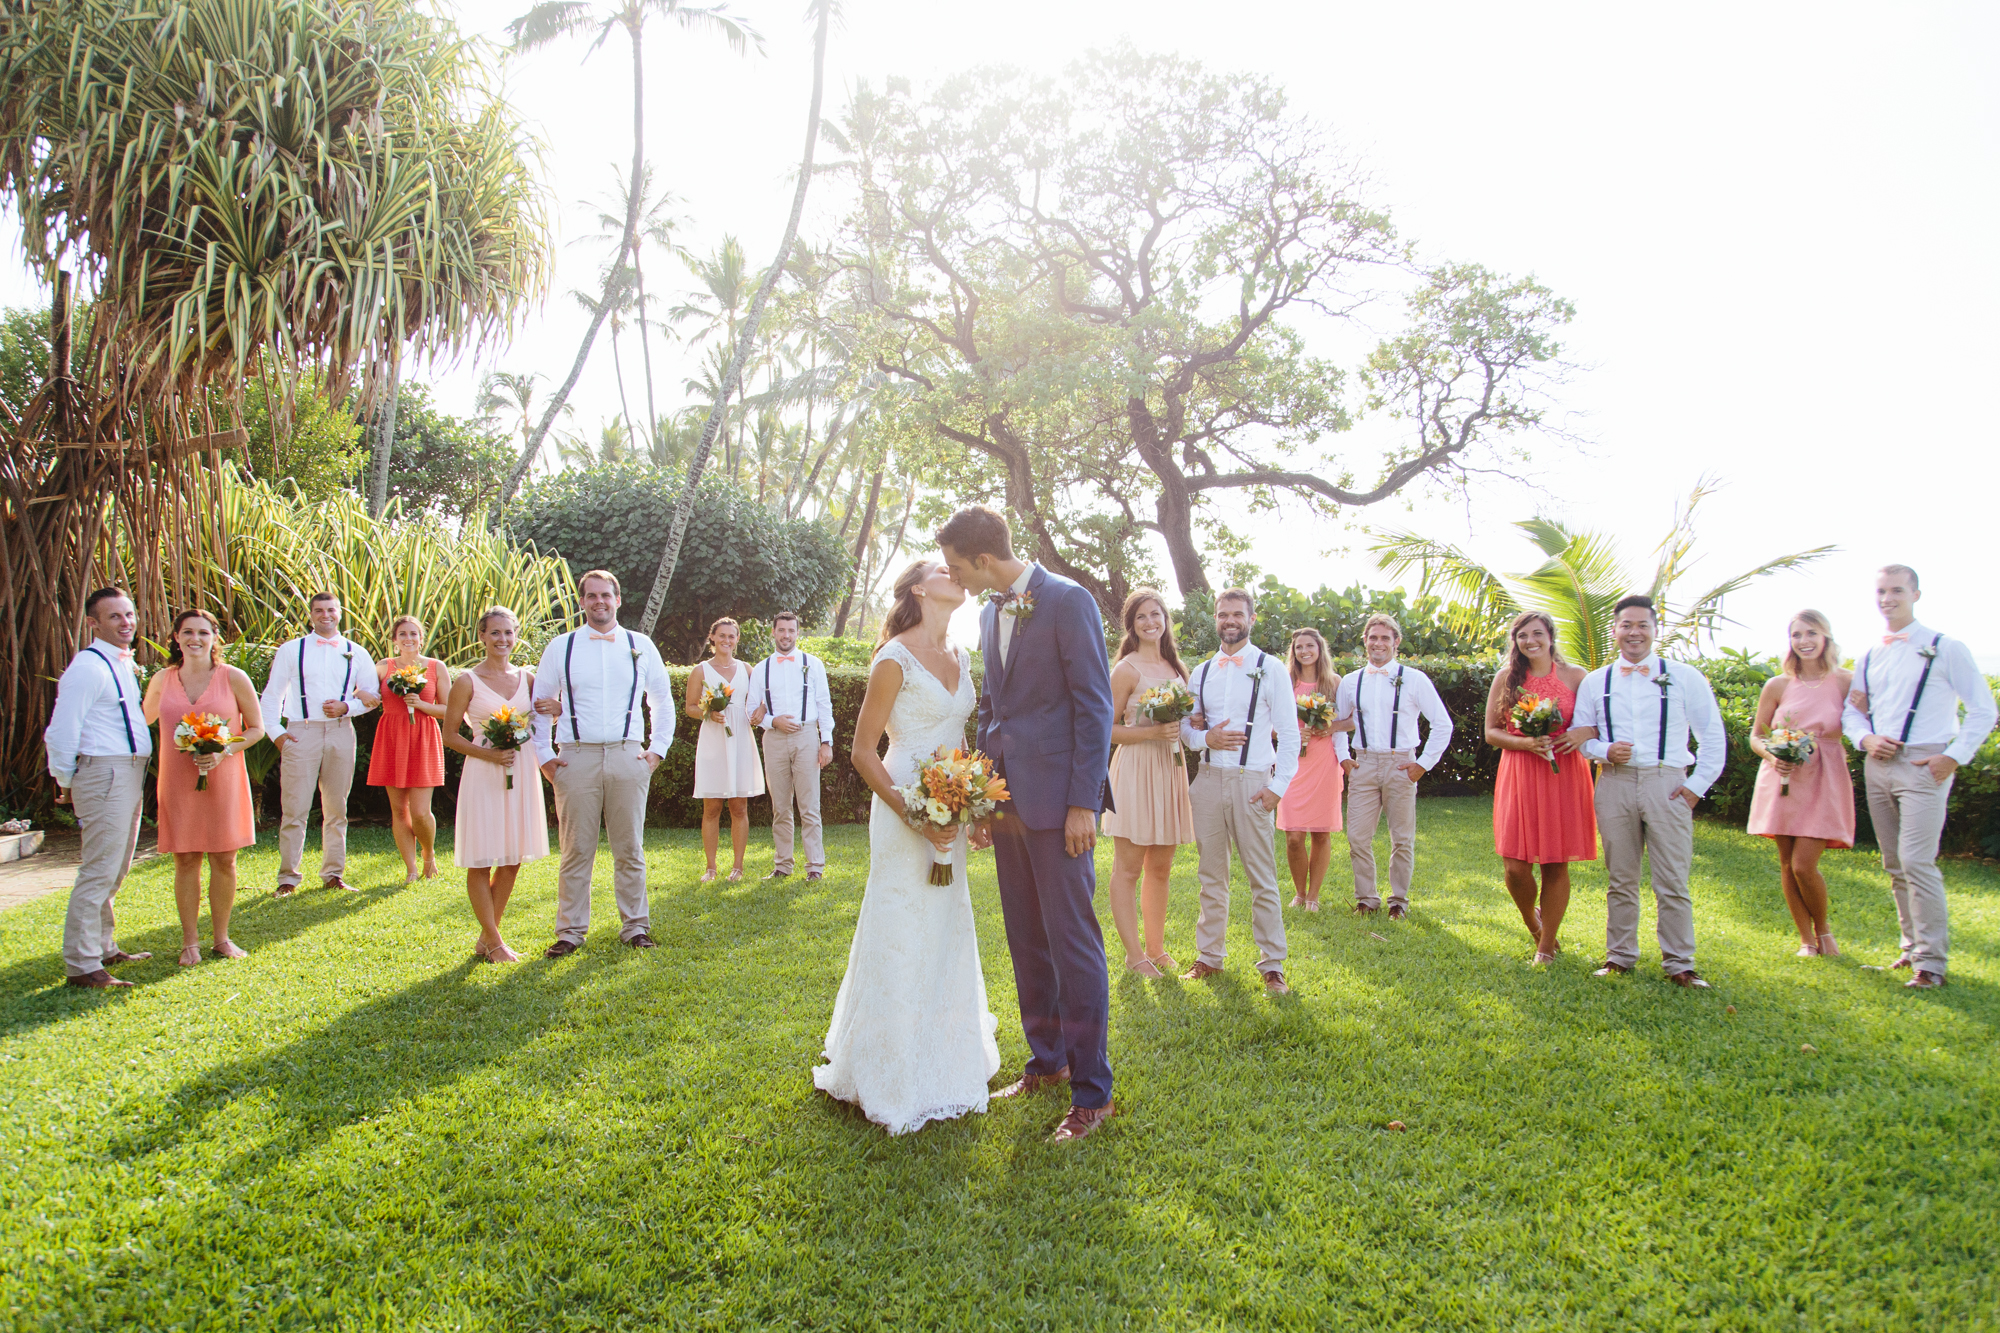 San Diego Wedding Photographer, San Diego Wedding photography, Hawaii Wedding Venue, oahu Wedding Venue, Hawaii Polo Club, Oahu Polo Club, Oahu Wedding, Hawaii Wedding, outdoor wedding, Beach wedding